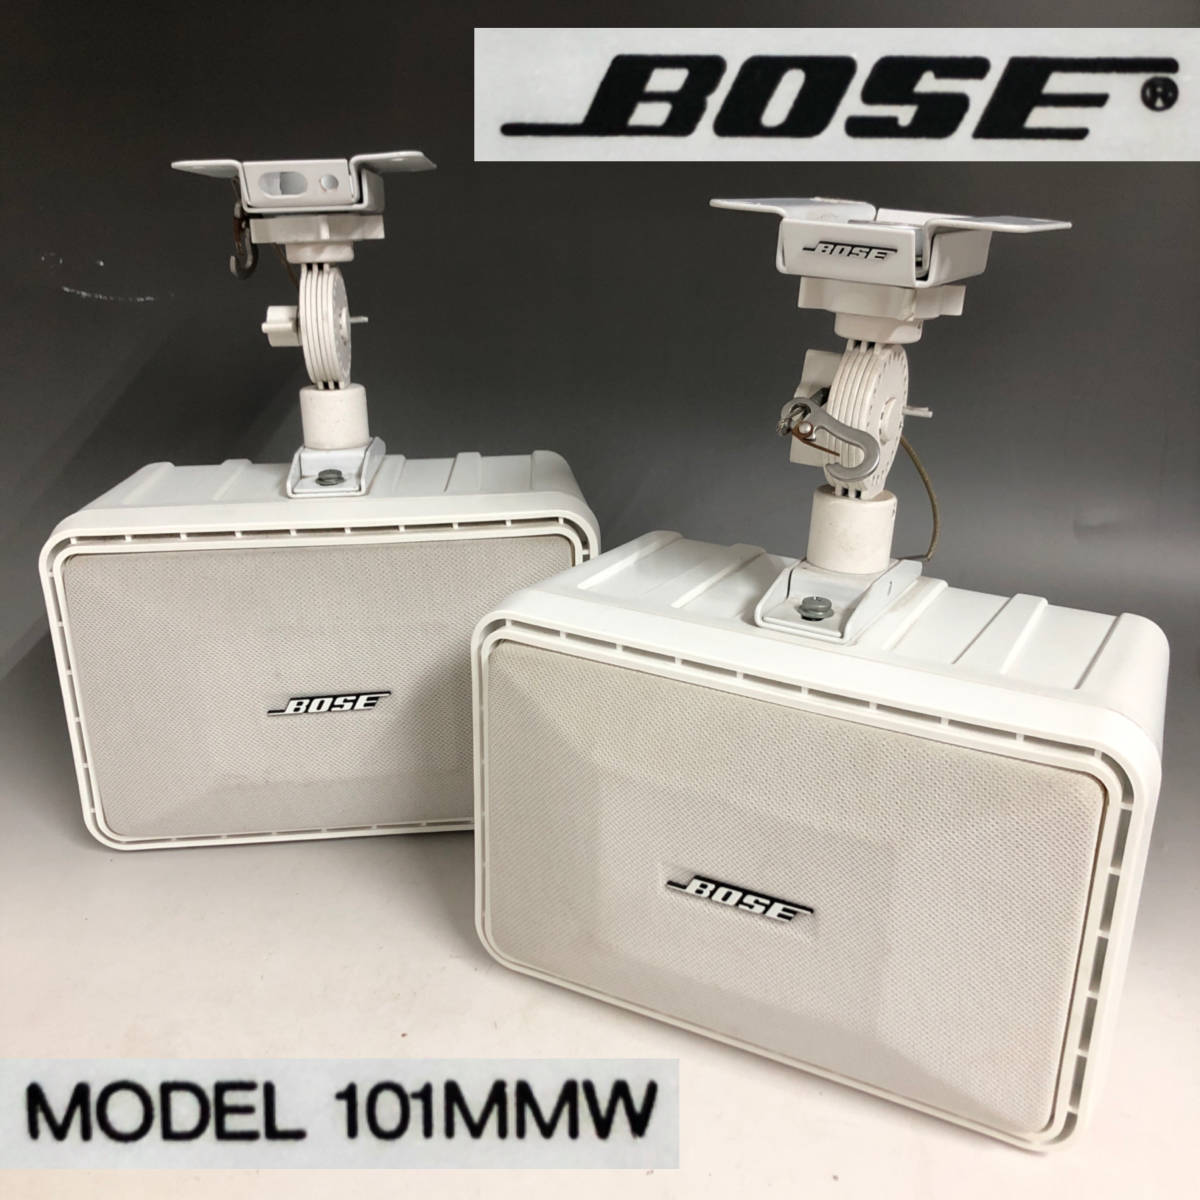 BOSE ボーズ スピーカー 101MMW ホワイト ペア連番2点 スピーカー オーディオ機器 家電・スマホ・カメラ 買取り実績